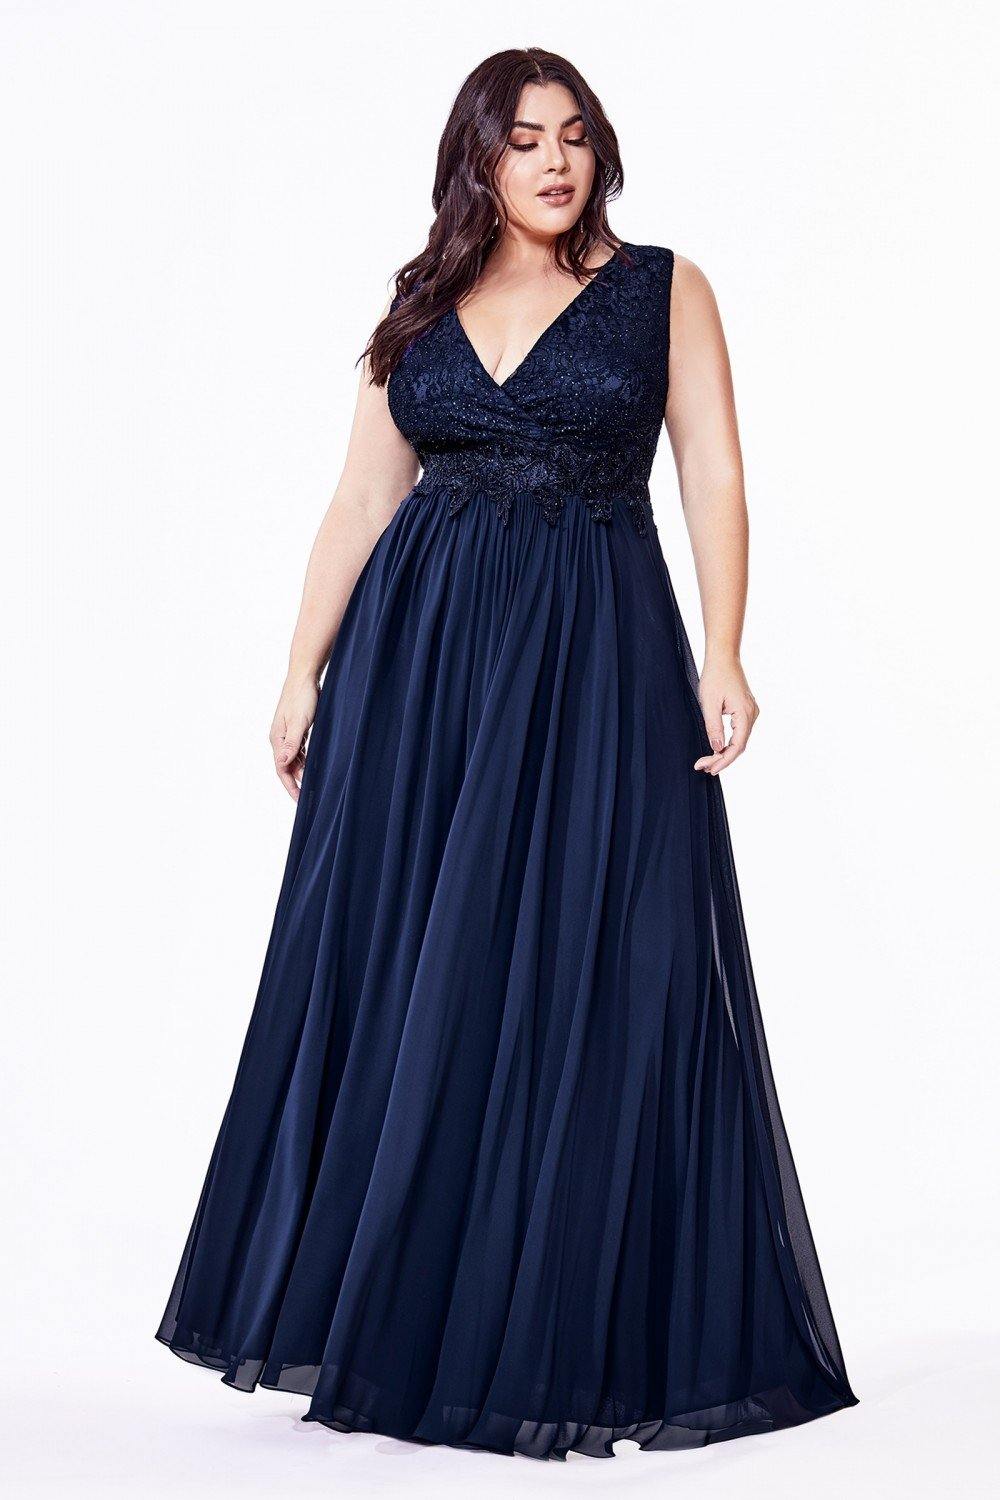 Long Sleeveless Plus Size Prom Dress Navy